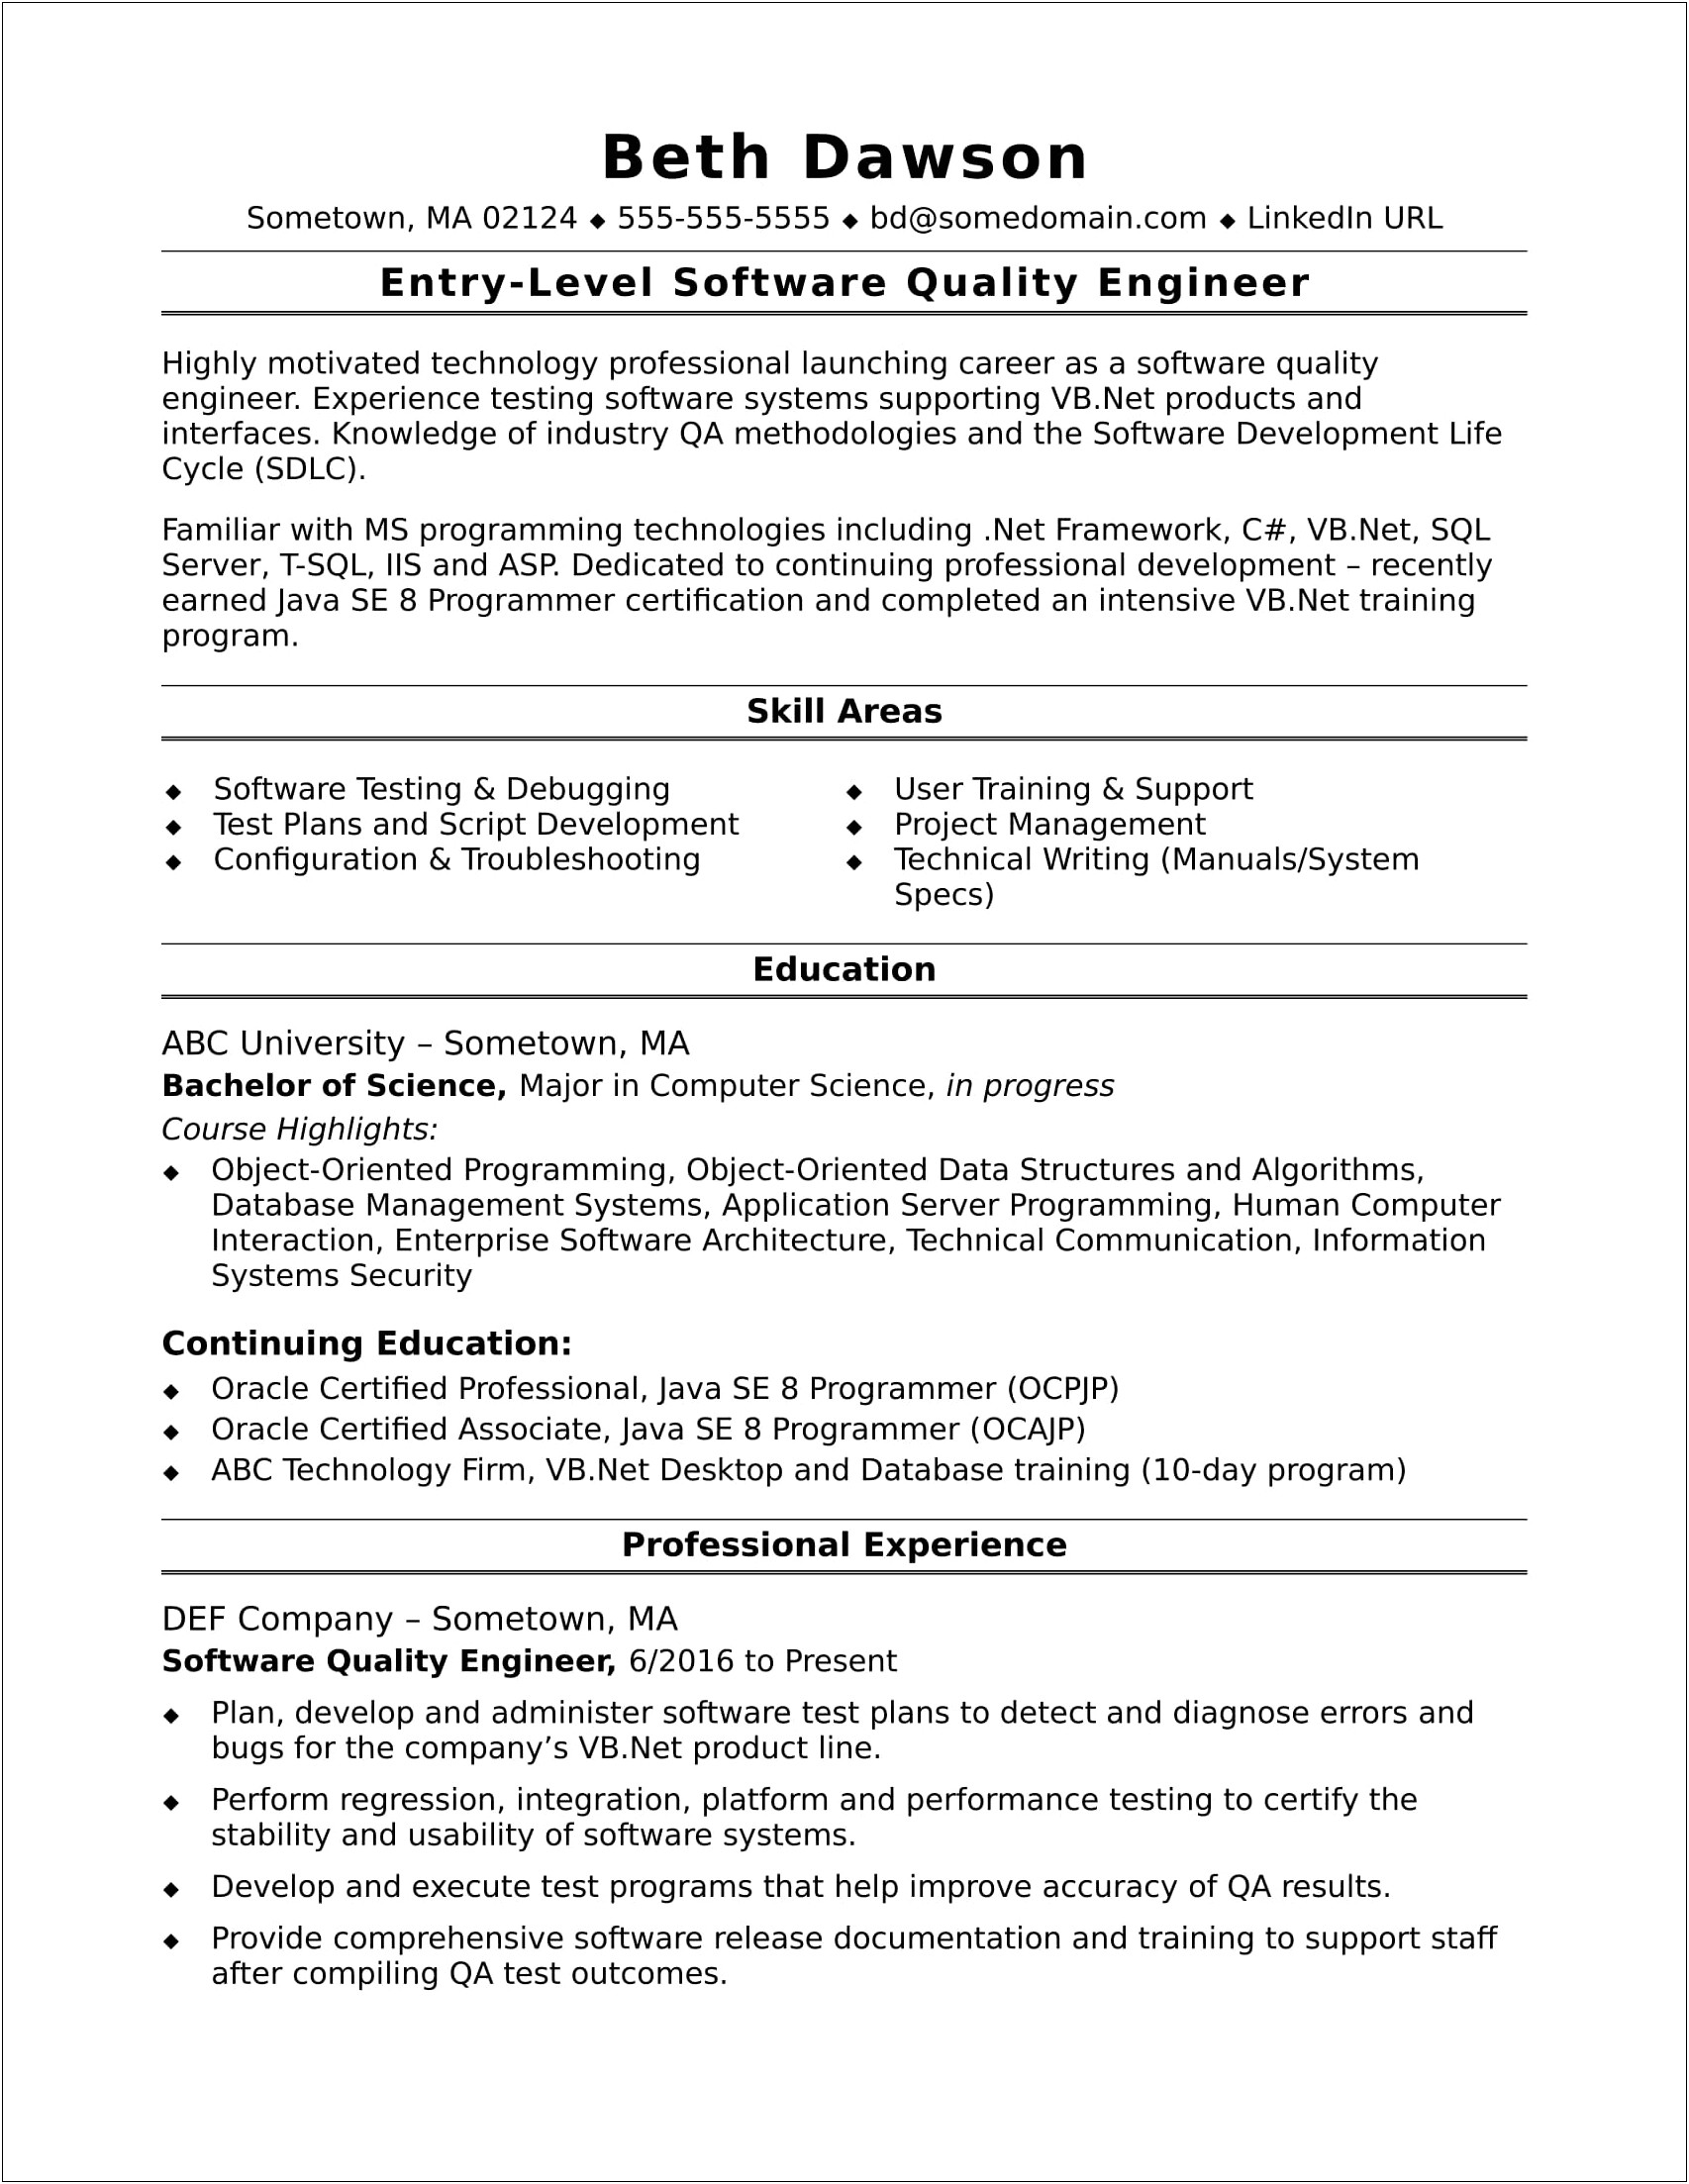 Best Resume Format For Entry Level